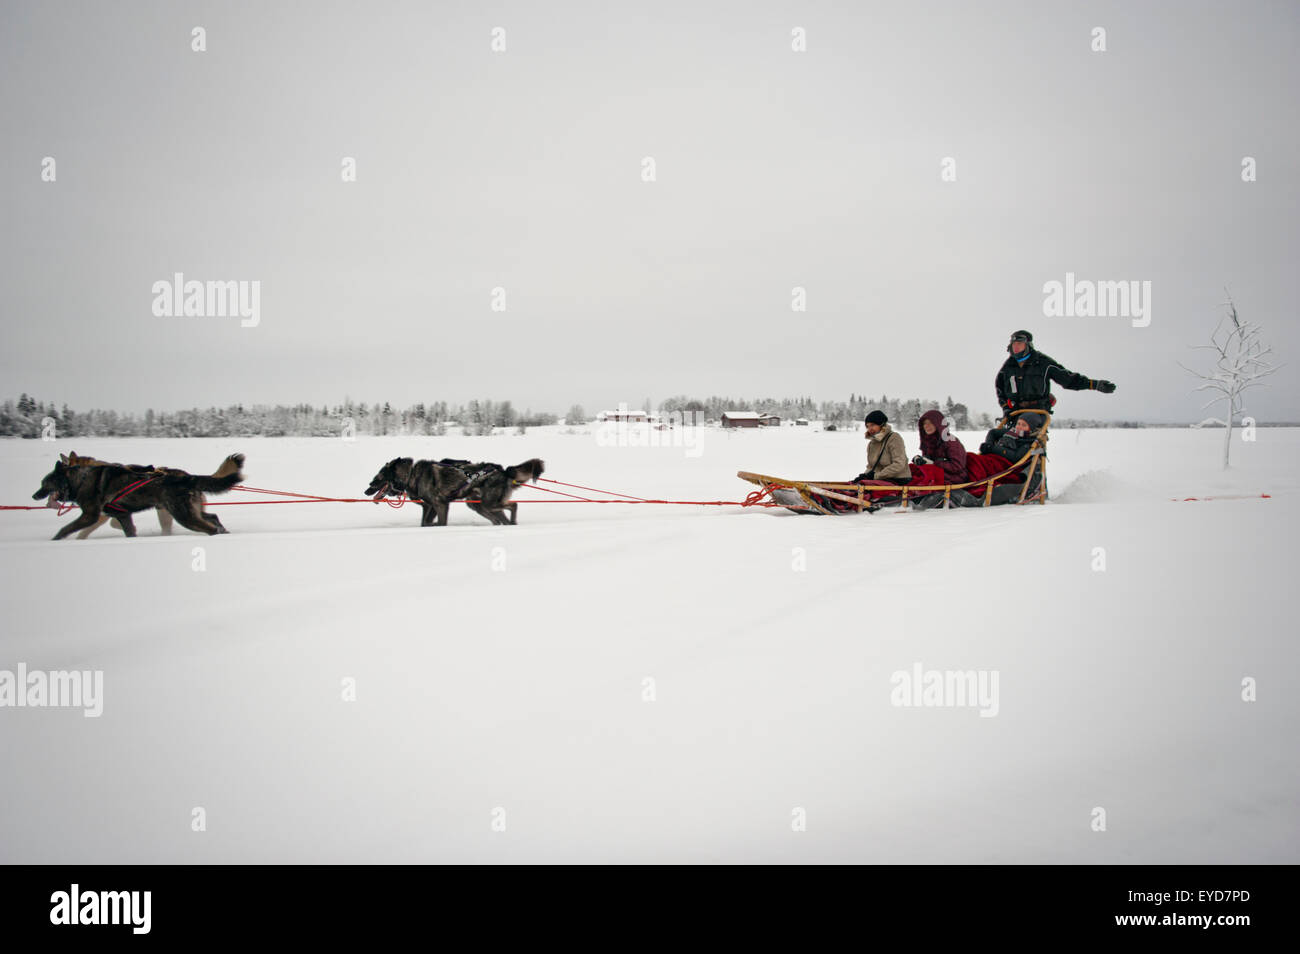 Husky Sled Tour At The Polar Speed Husky Farm, Levi, Lapland, Finland Stock  Photo - Alamy